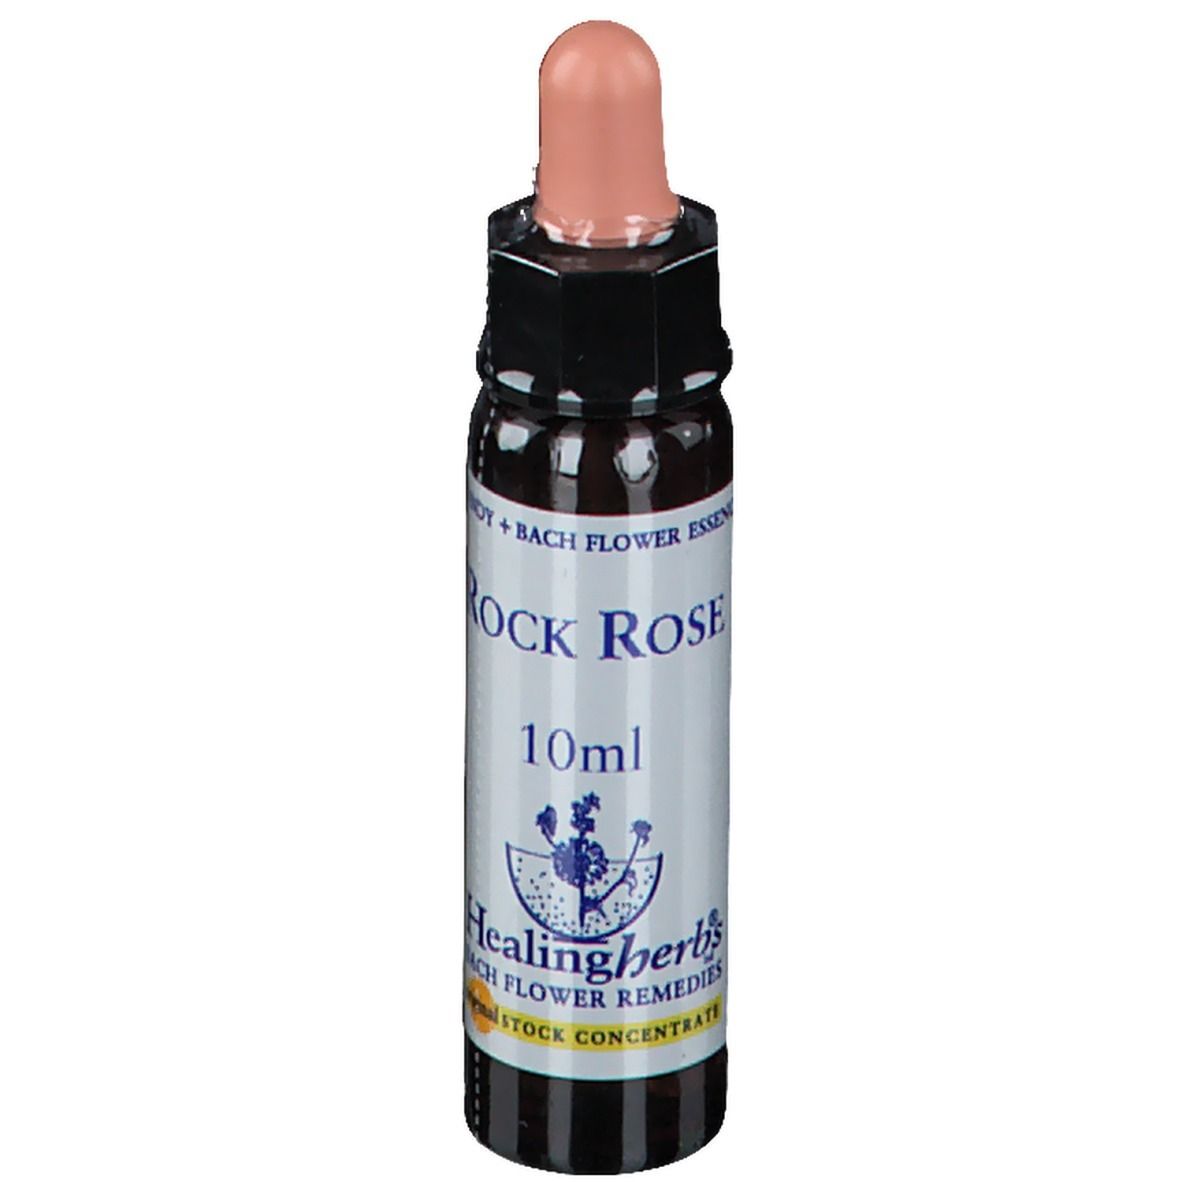 Healing Herbs® Rock Rose